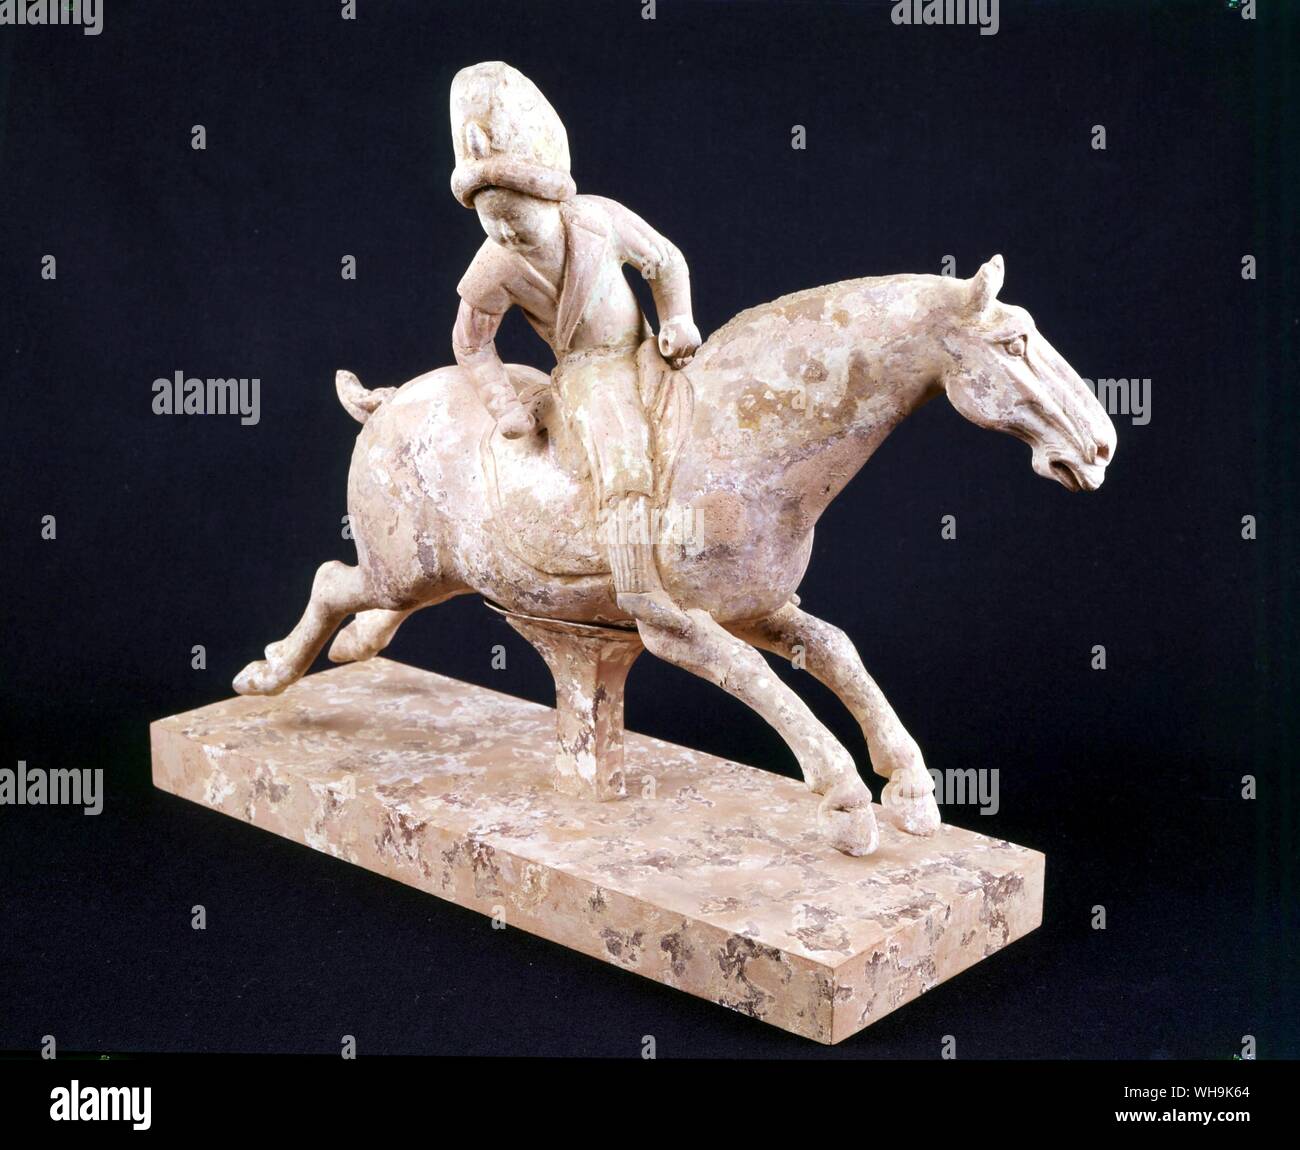 Chinese Sculpture Ceramics Stock Photo